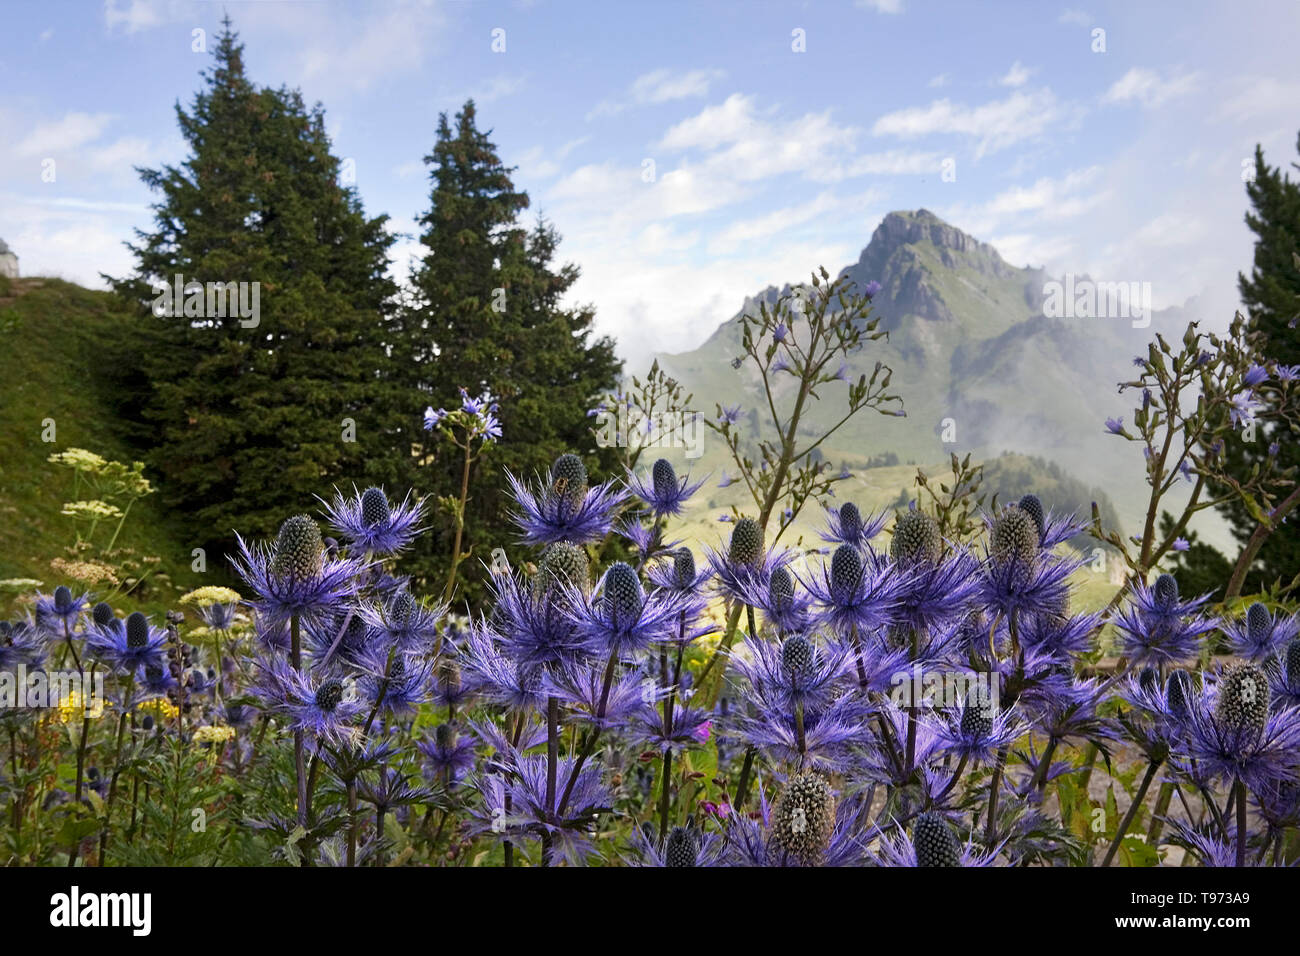 Botanischer Alpengarten, Schynige Platte, with the peak of the Loucherhorn in the distance and a mass of wild flowers in the foreground, Switzerland Stock Photo